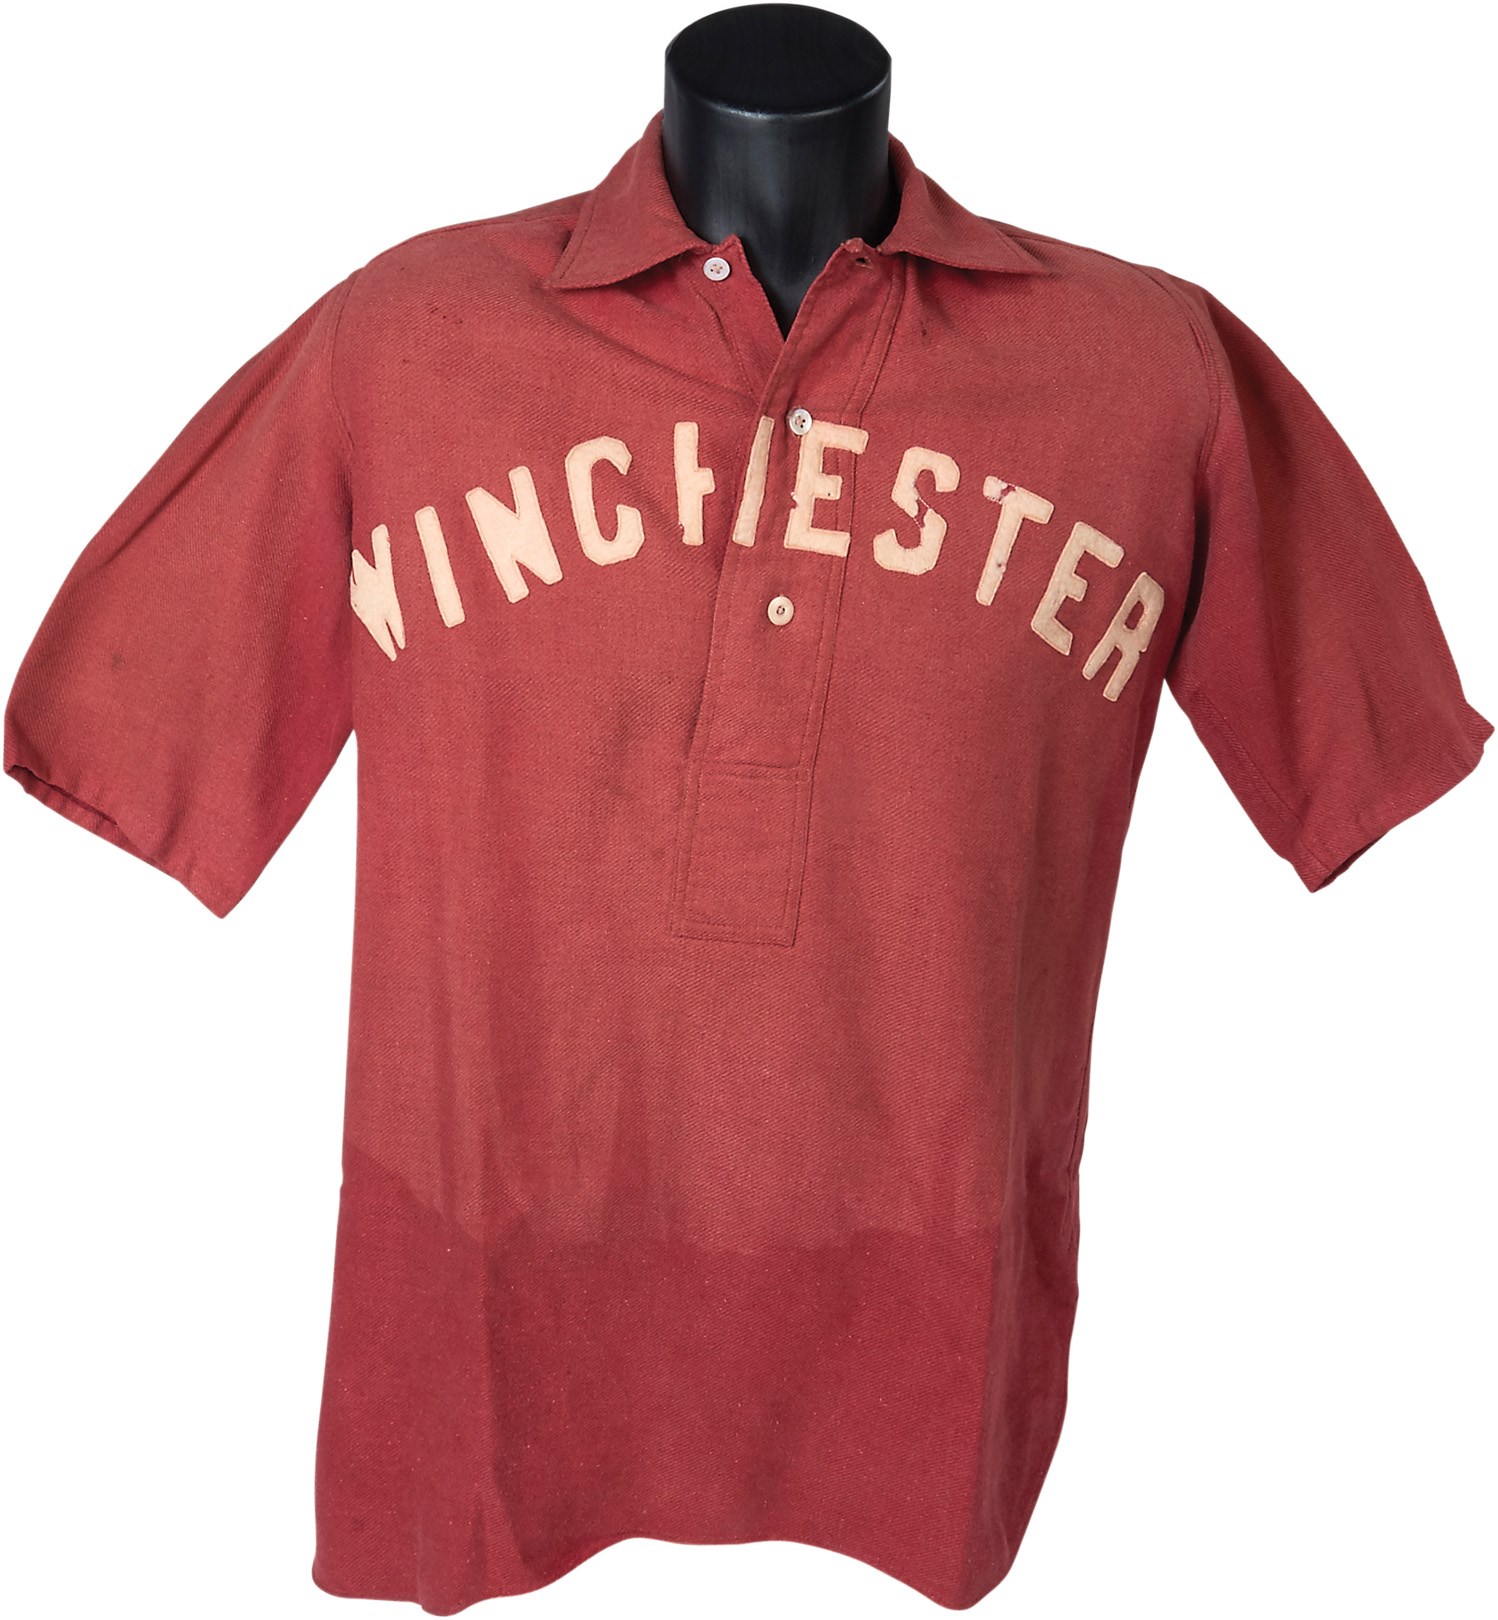 - 1910 Winchester Repeating Army Baseball Team Uniform